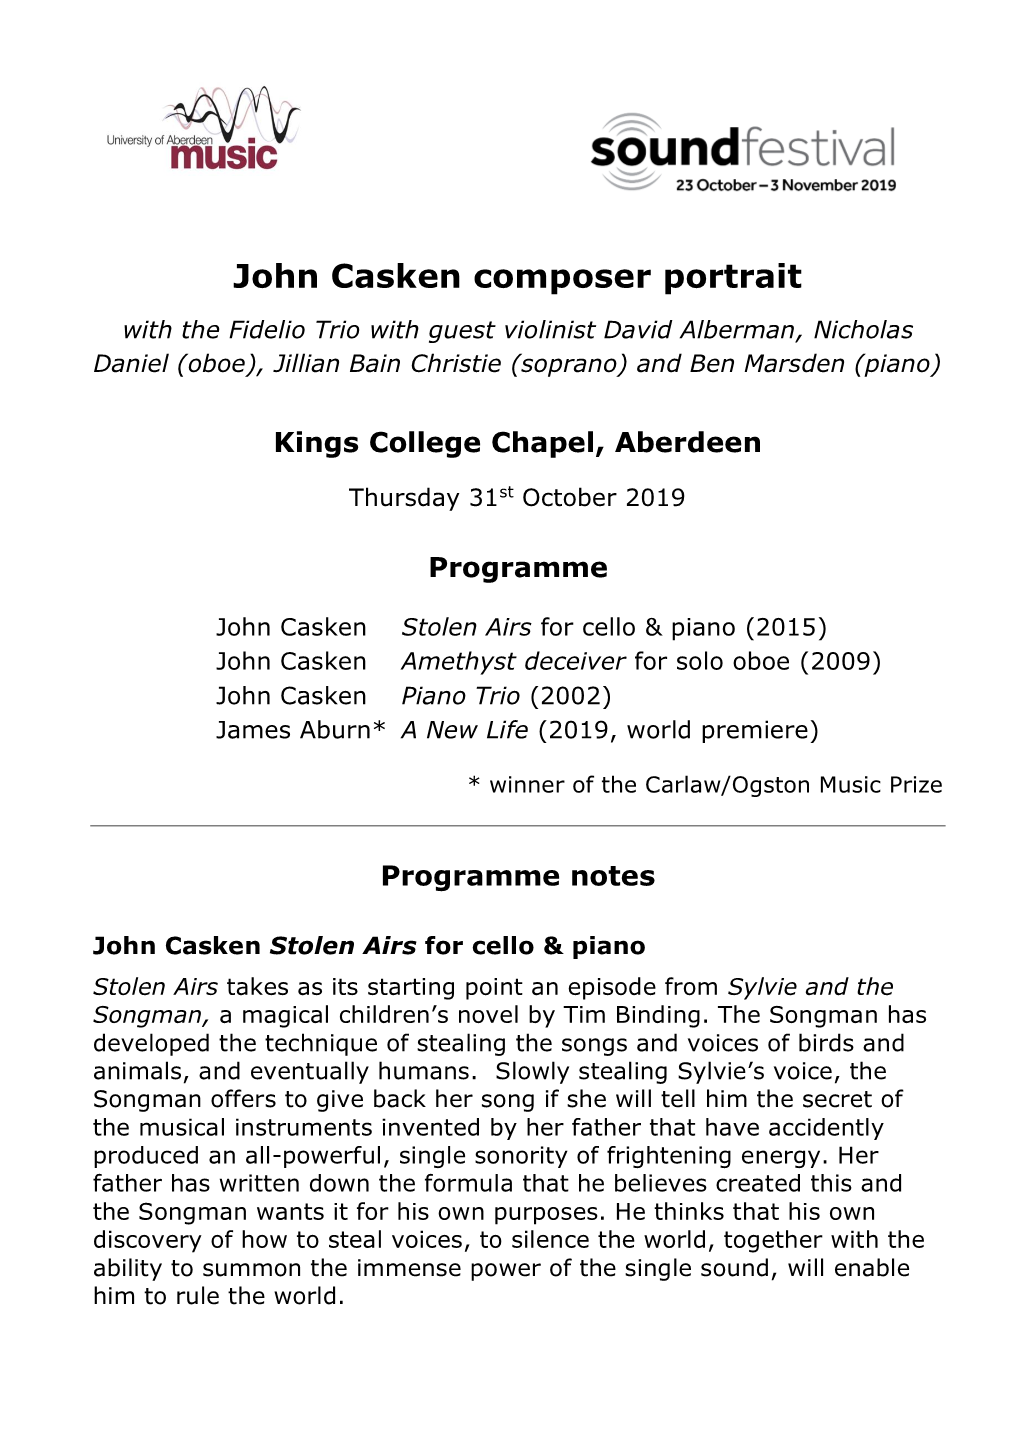 John Casken Composer Portrait